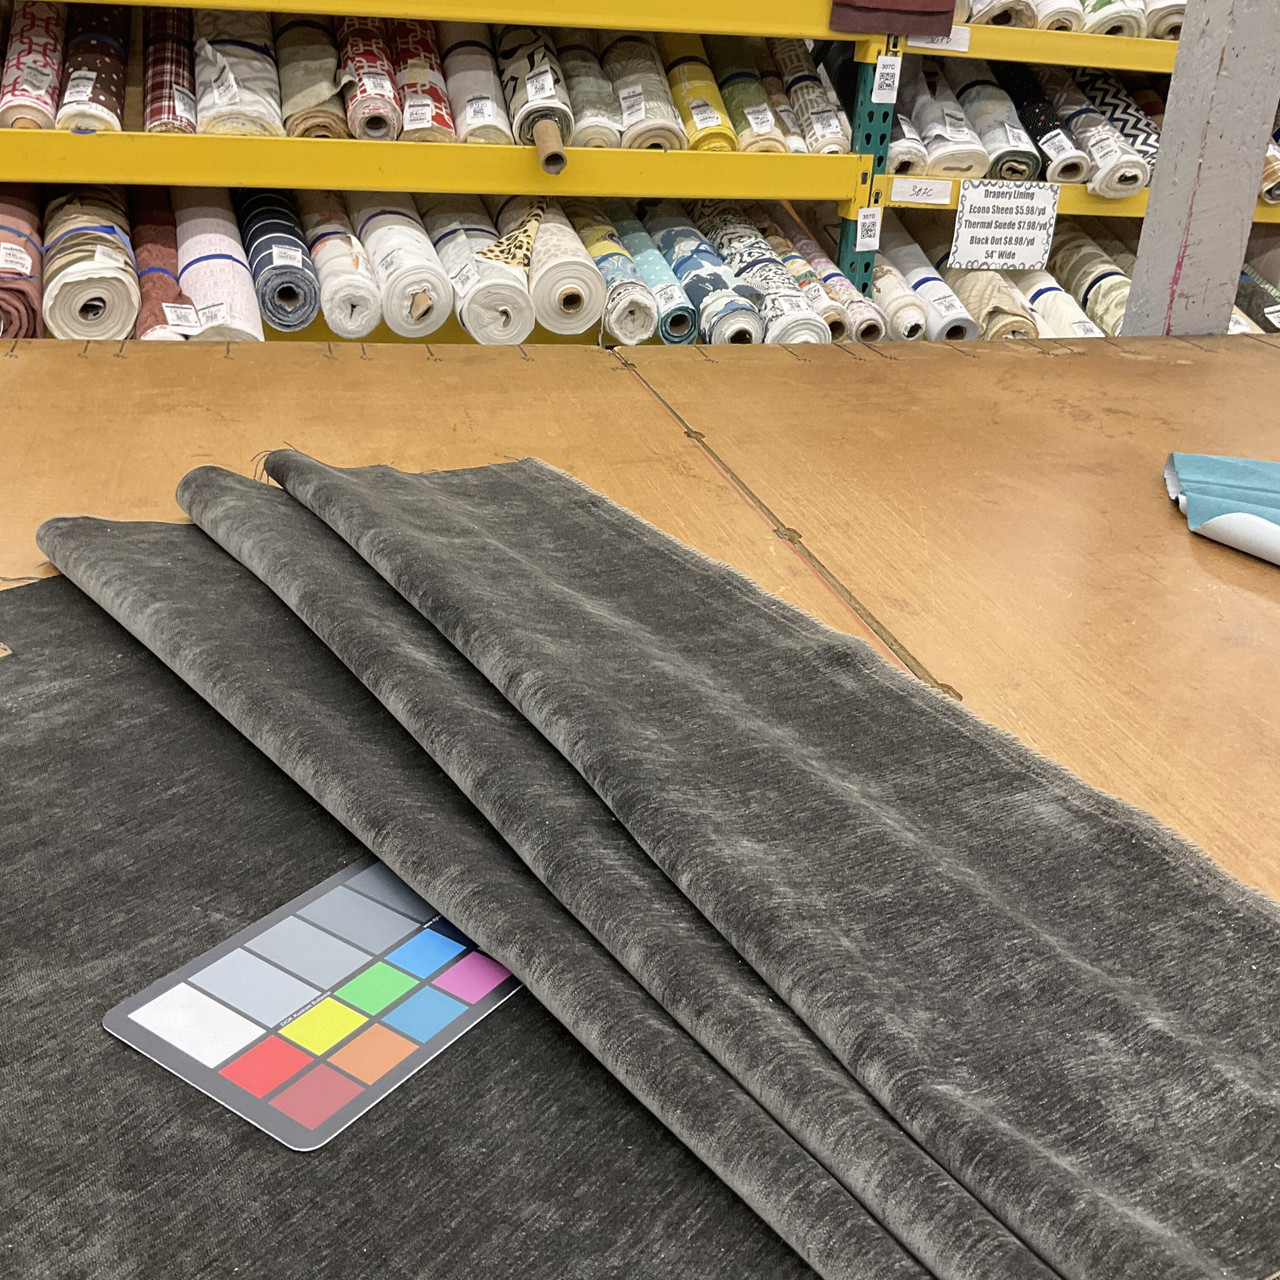 Dark Taupe Chenille Velvet, R-RENLEY GRAPHITE, Upholstery Fabric, Regal  Fabrics Brand, 54 inch Wide